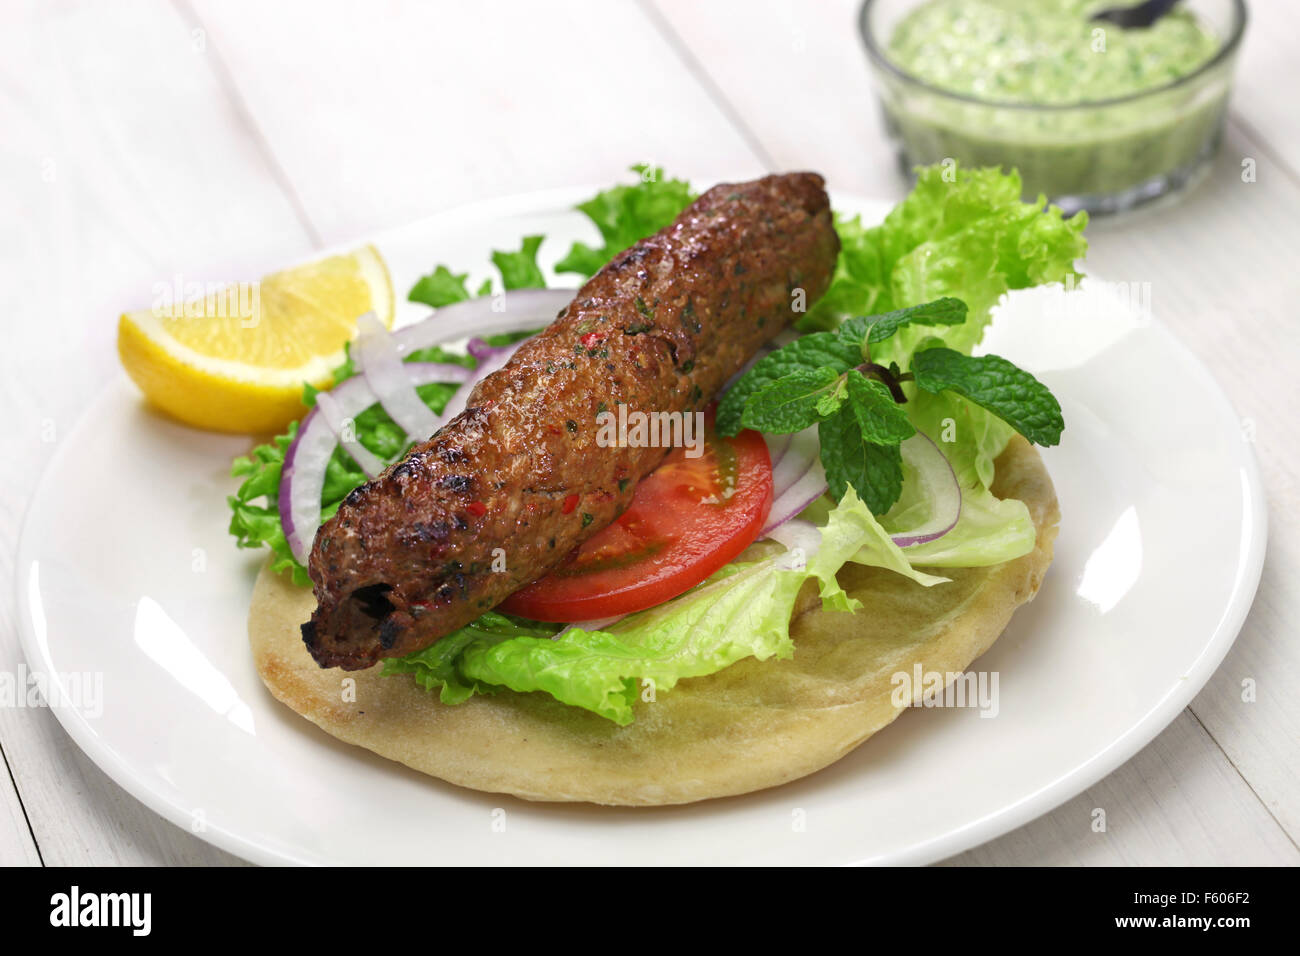 mutton seekh kabab kebab sandwich with mint chutney Stock Photo